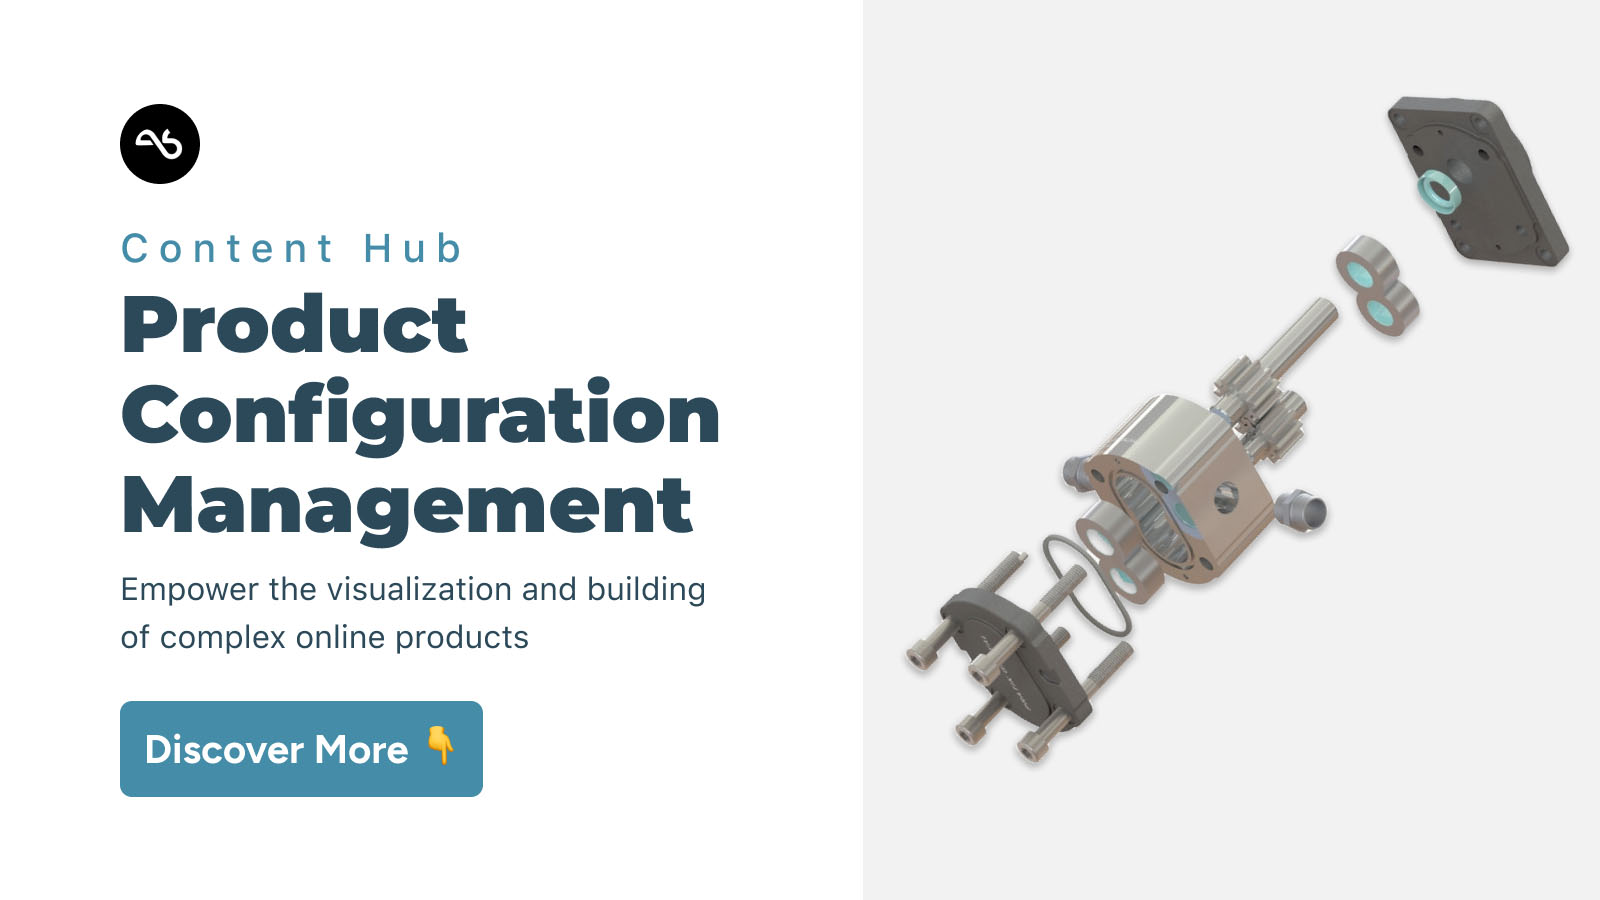 Content Hub Product Configuration Management with a 3D model machine parts